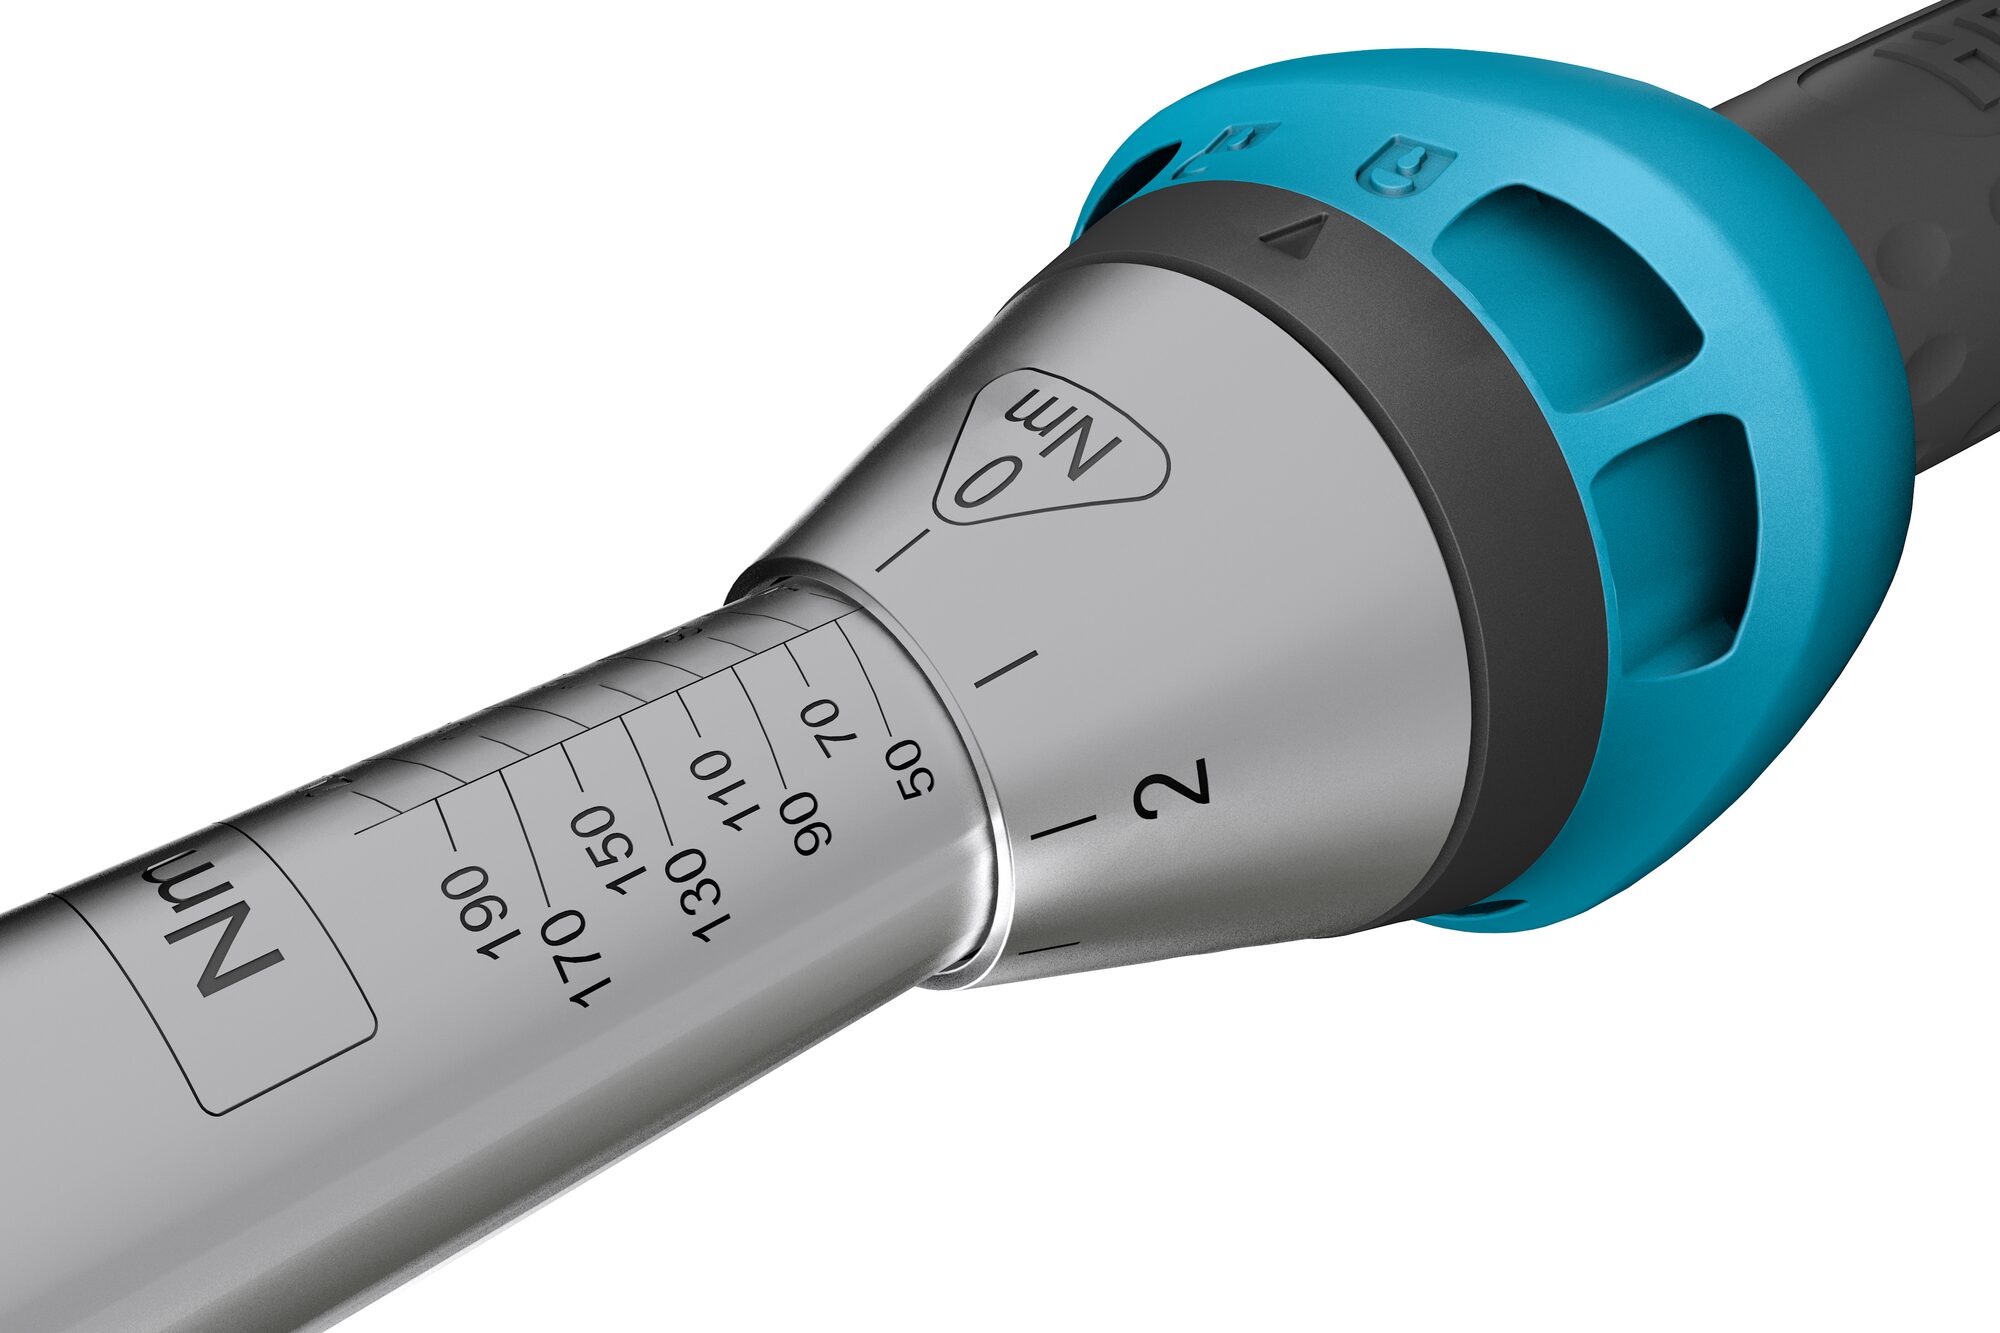 HAZET Drehmoment-Schlüssel 5107-3CT · Nm min-max: 1–9 Nm · Toleranz: 4% · Vierkant massiv 6,3 mm (1/4 Zoll)